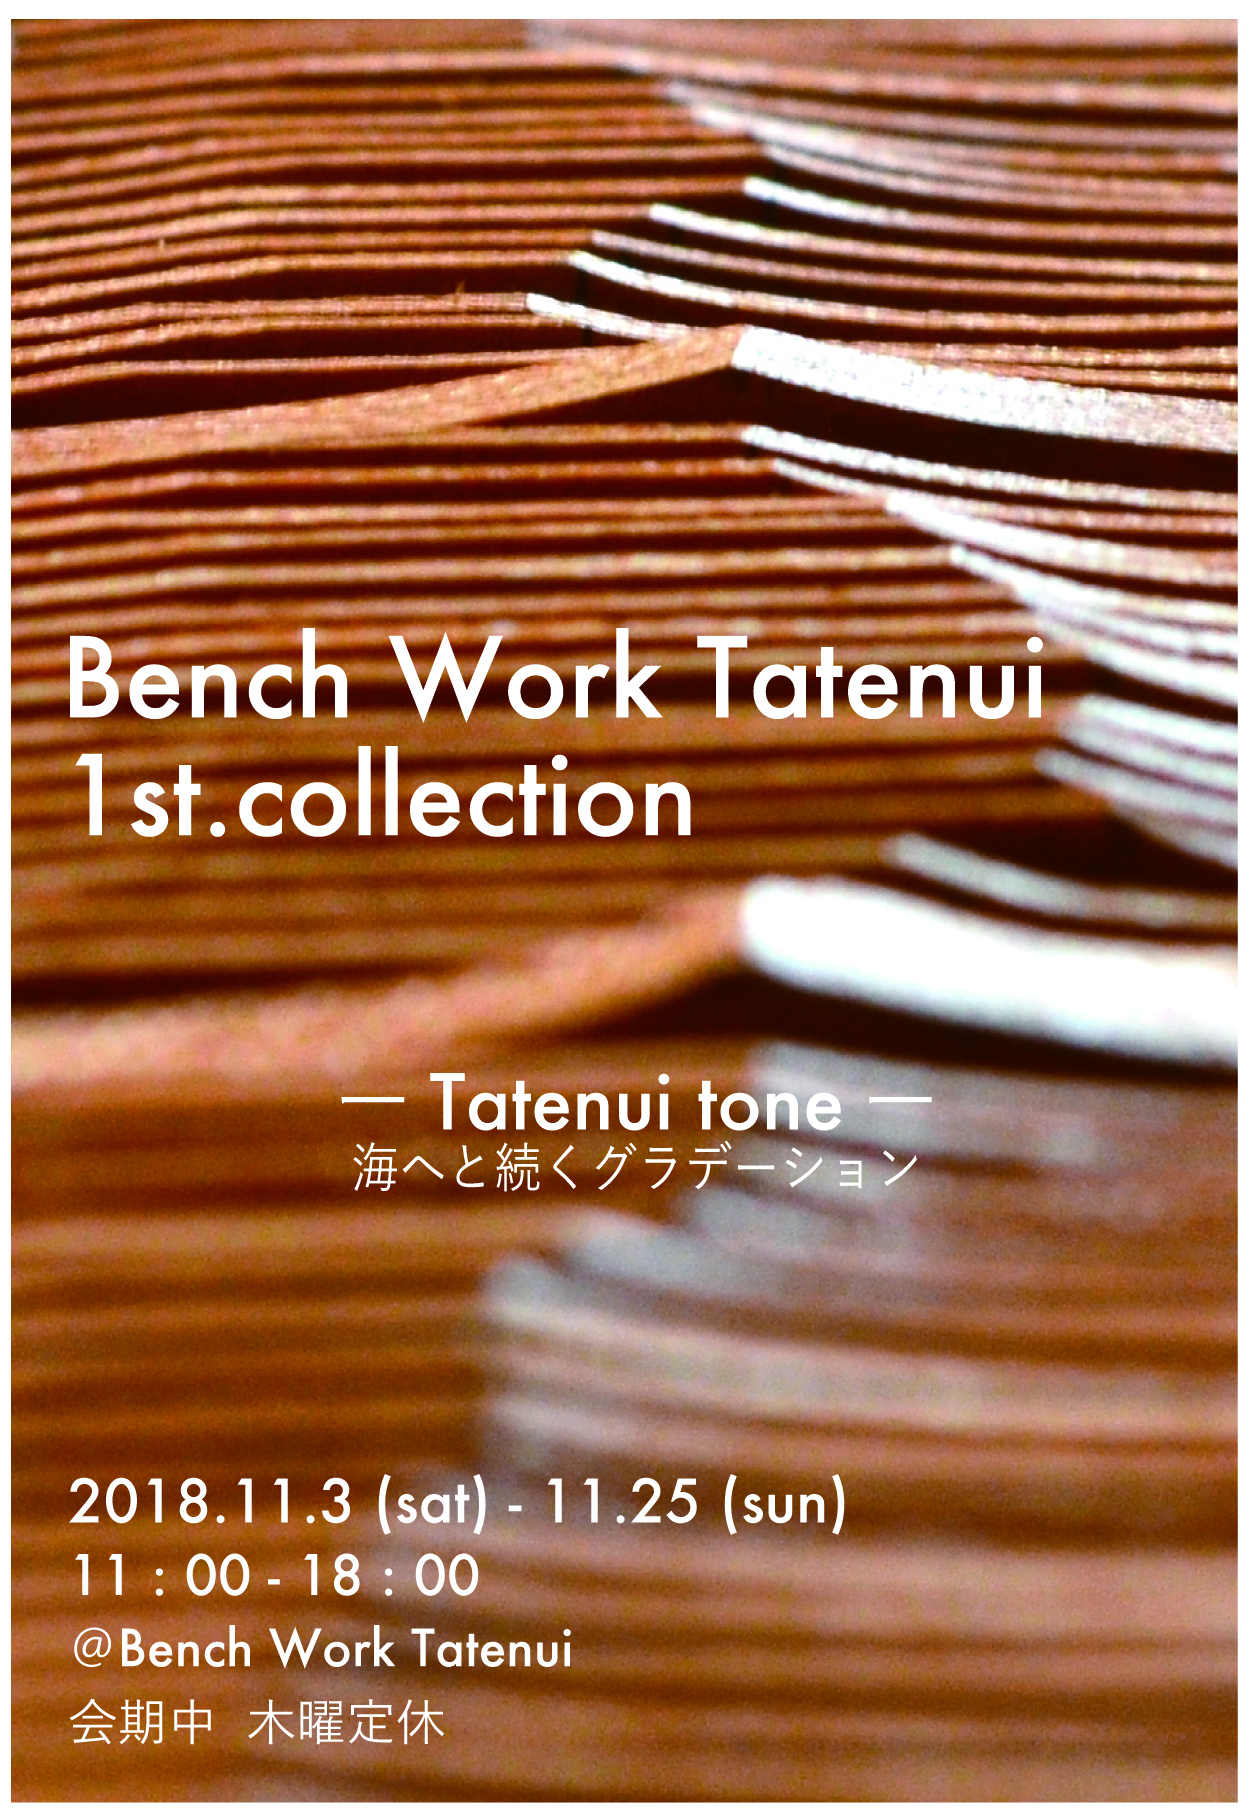 Bench Work Tatenui 1st.collection -Tatenui tone-海へと続くグラーデーション